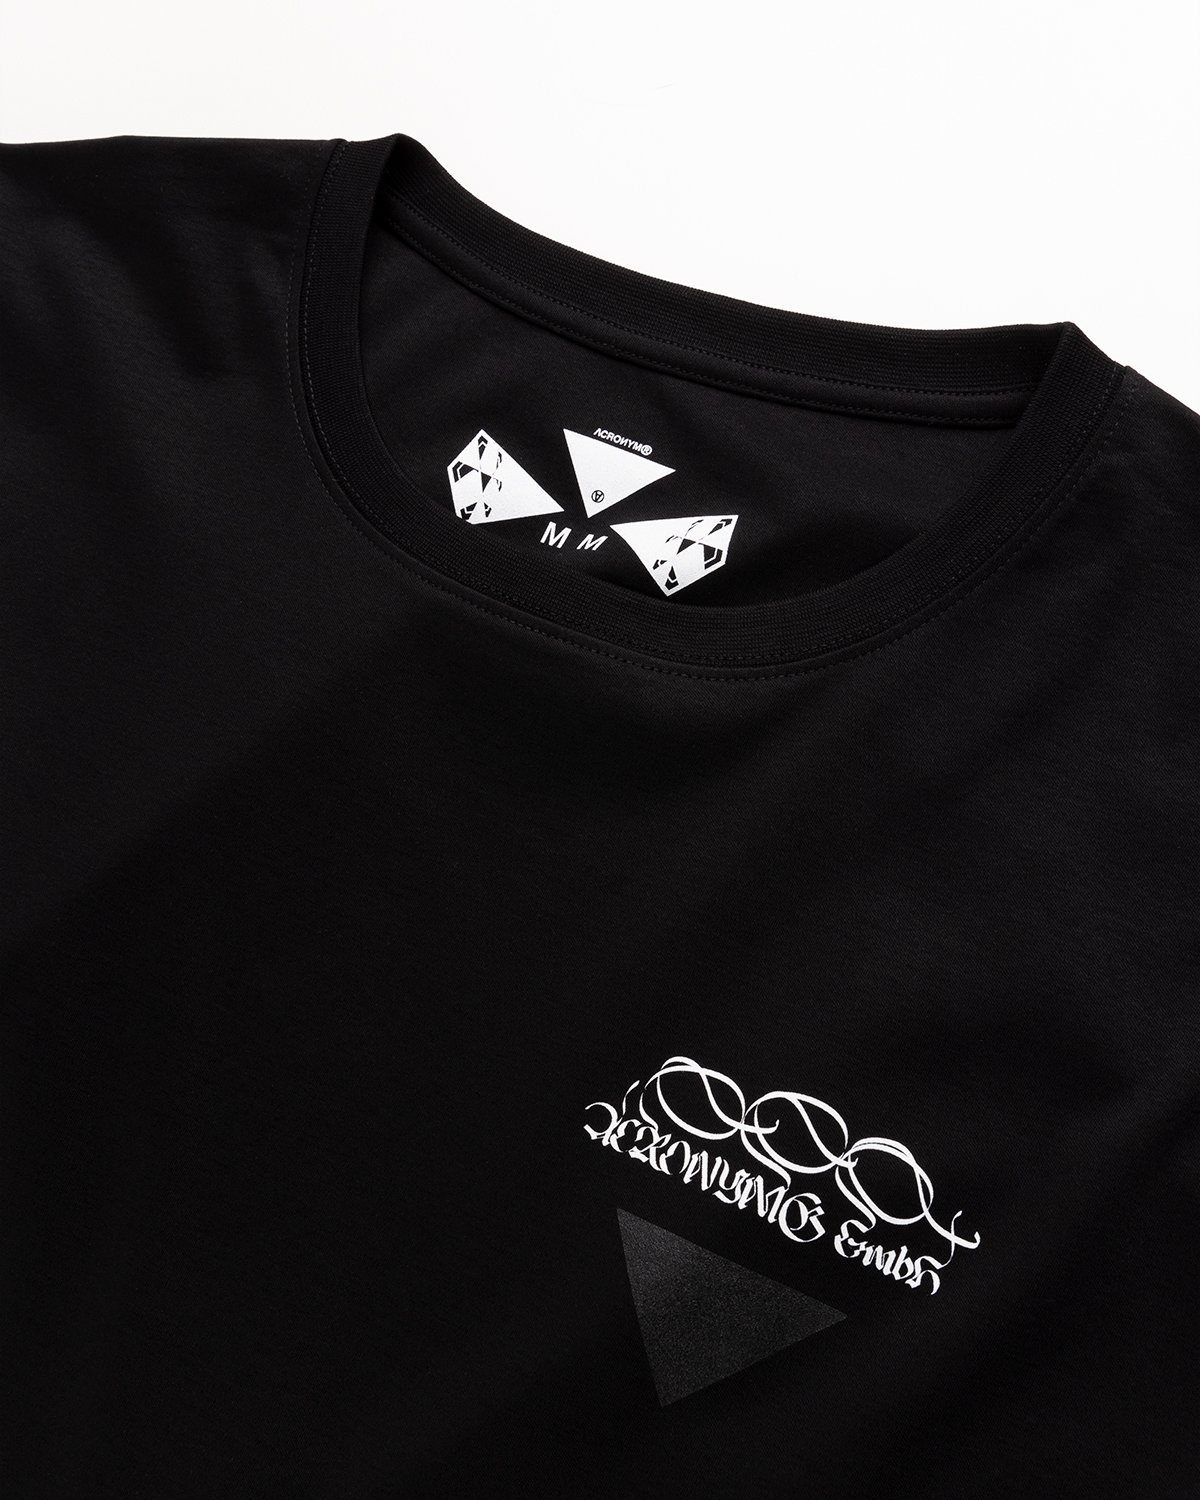 ACRONYM - S25-PR-A Sleeveless T-Shirt Black - Clothing - Black - Image 4